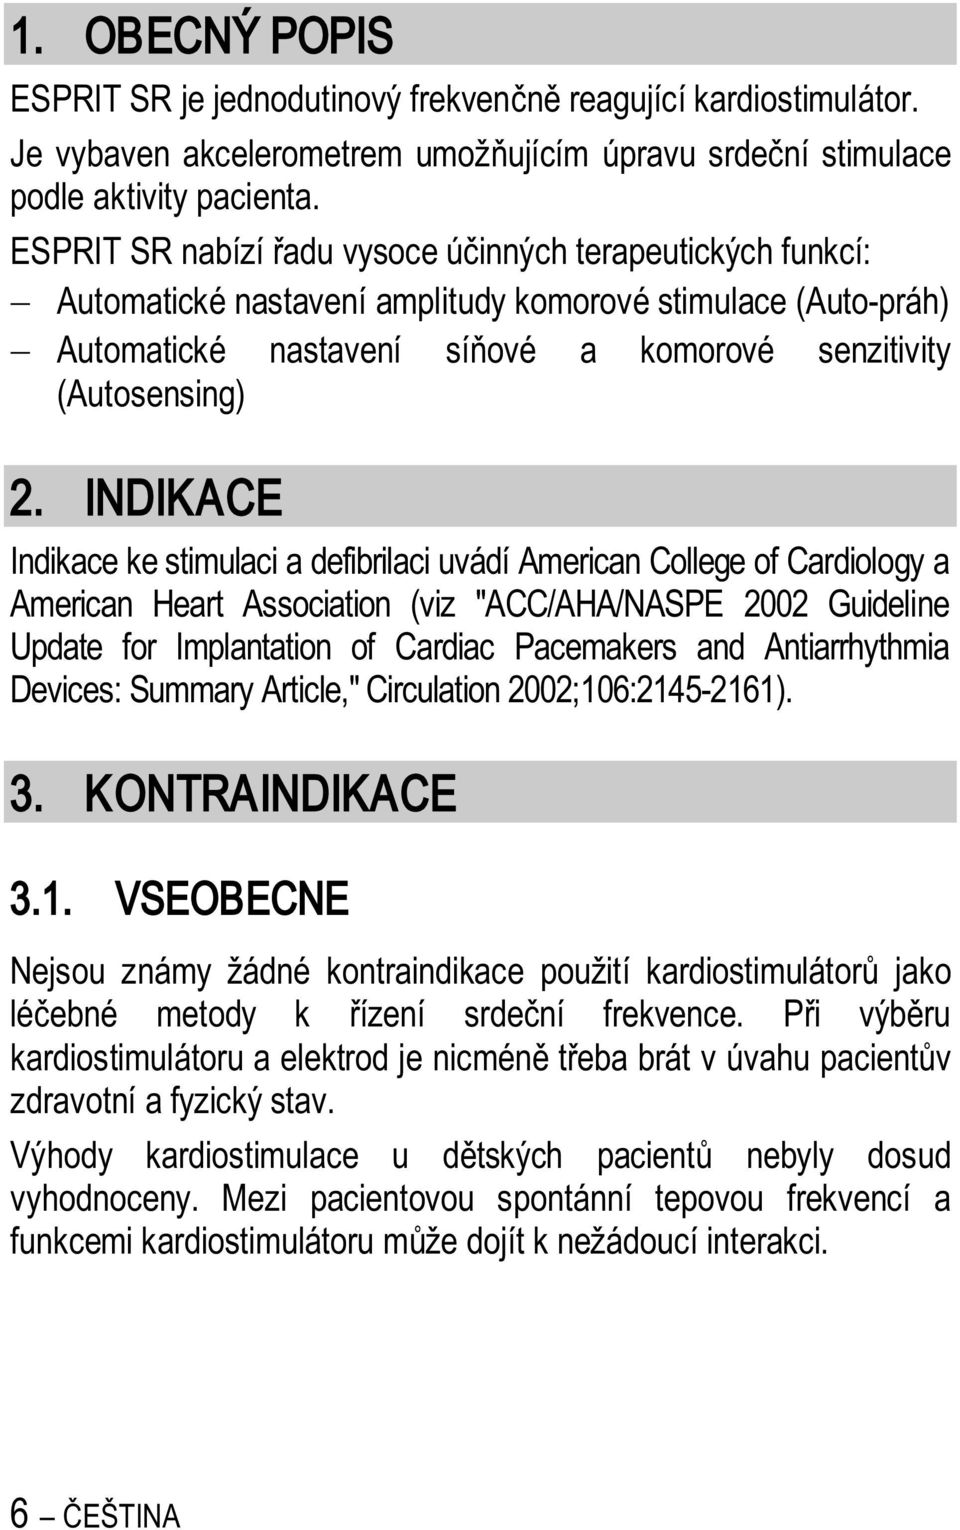 INDIKACE Indikace ke stimulaci a defibrilaci uvádí American College of Cardiology a American Heart Association (viz "ACC/AHA/NASPE 2002 Guideline Update for Implantation of Cardiac Pacemakers and